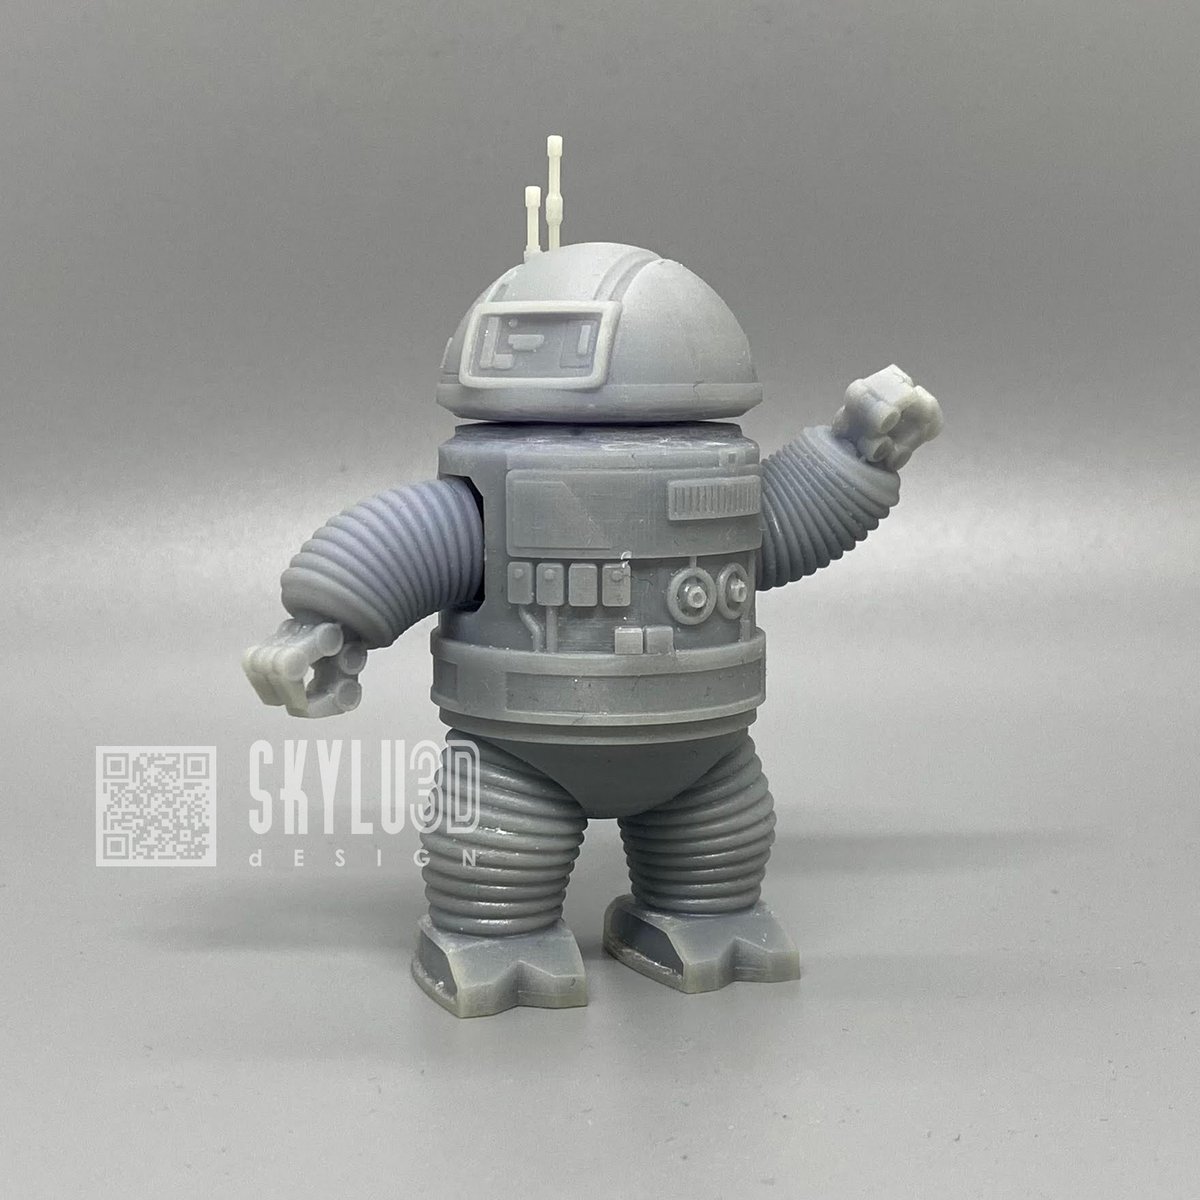 Image of Clink Robot by Skylu3d Design